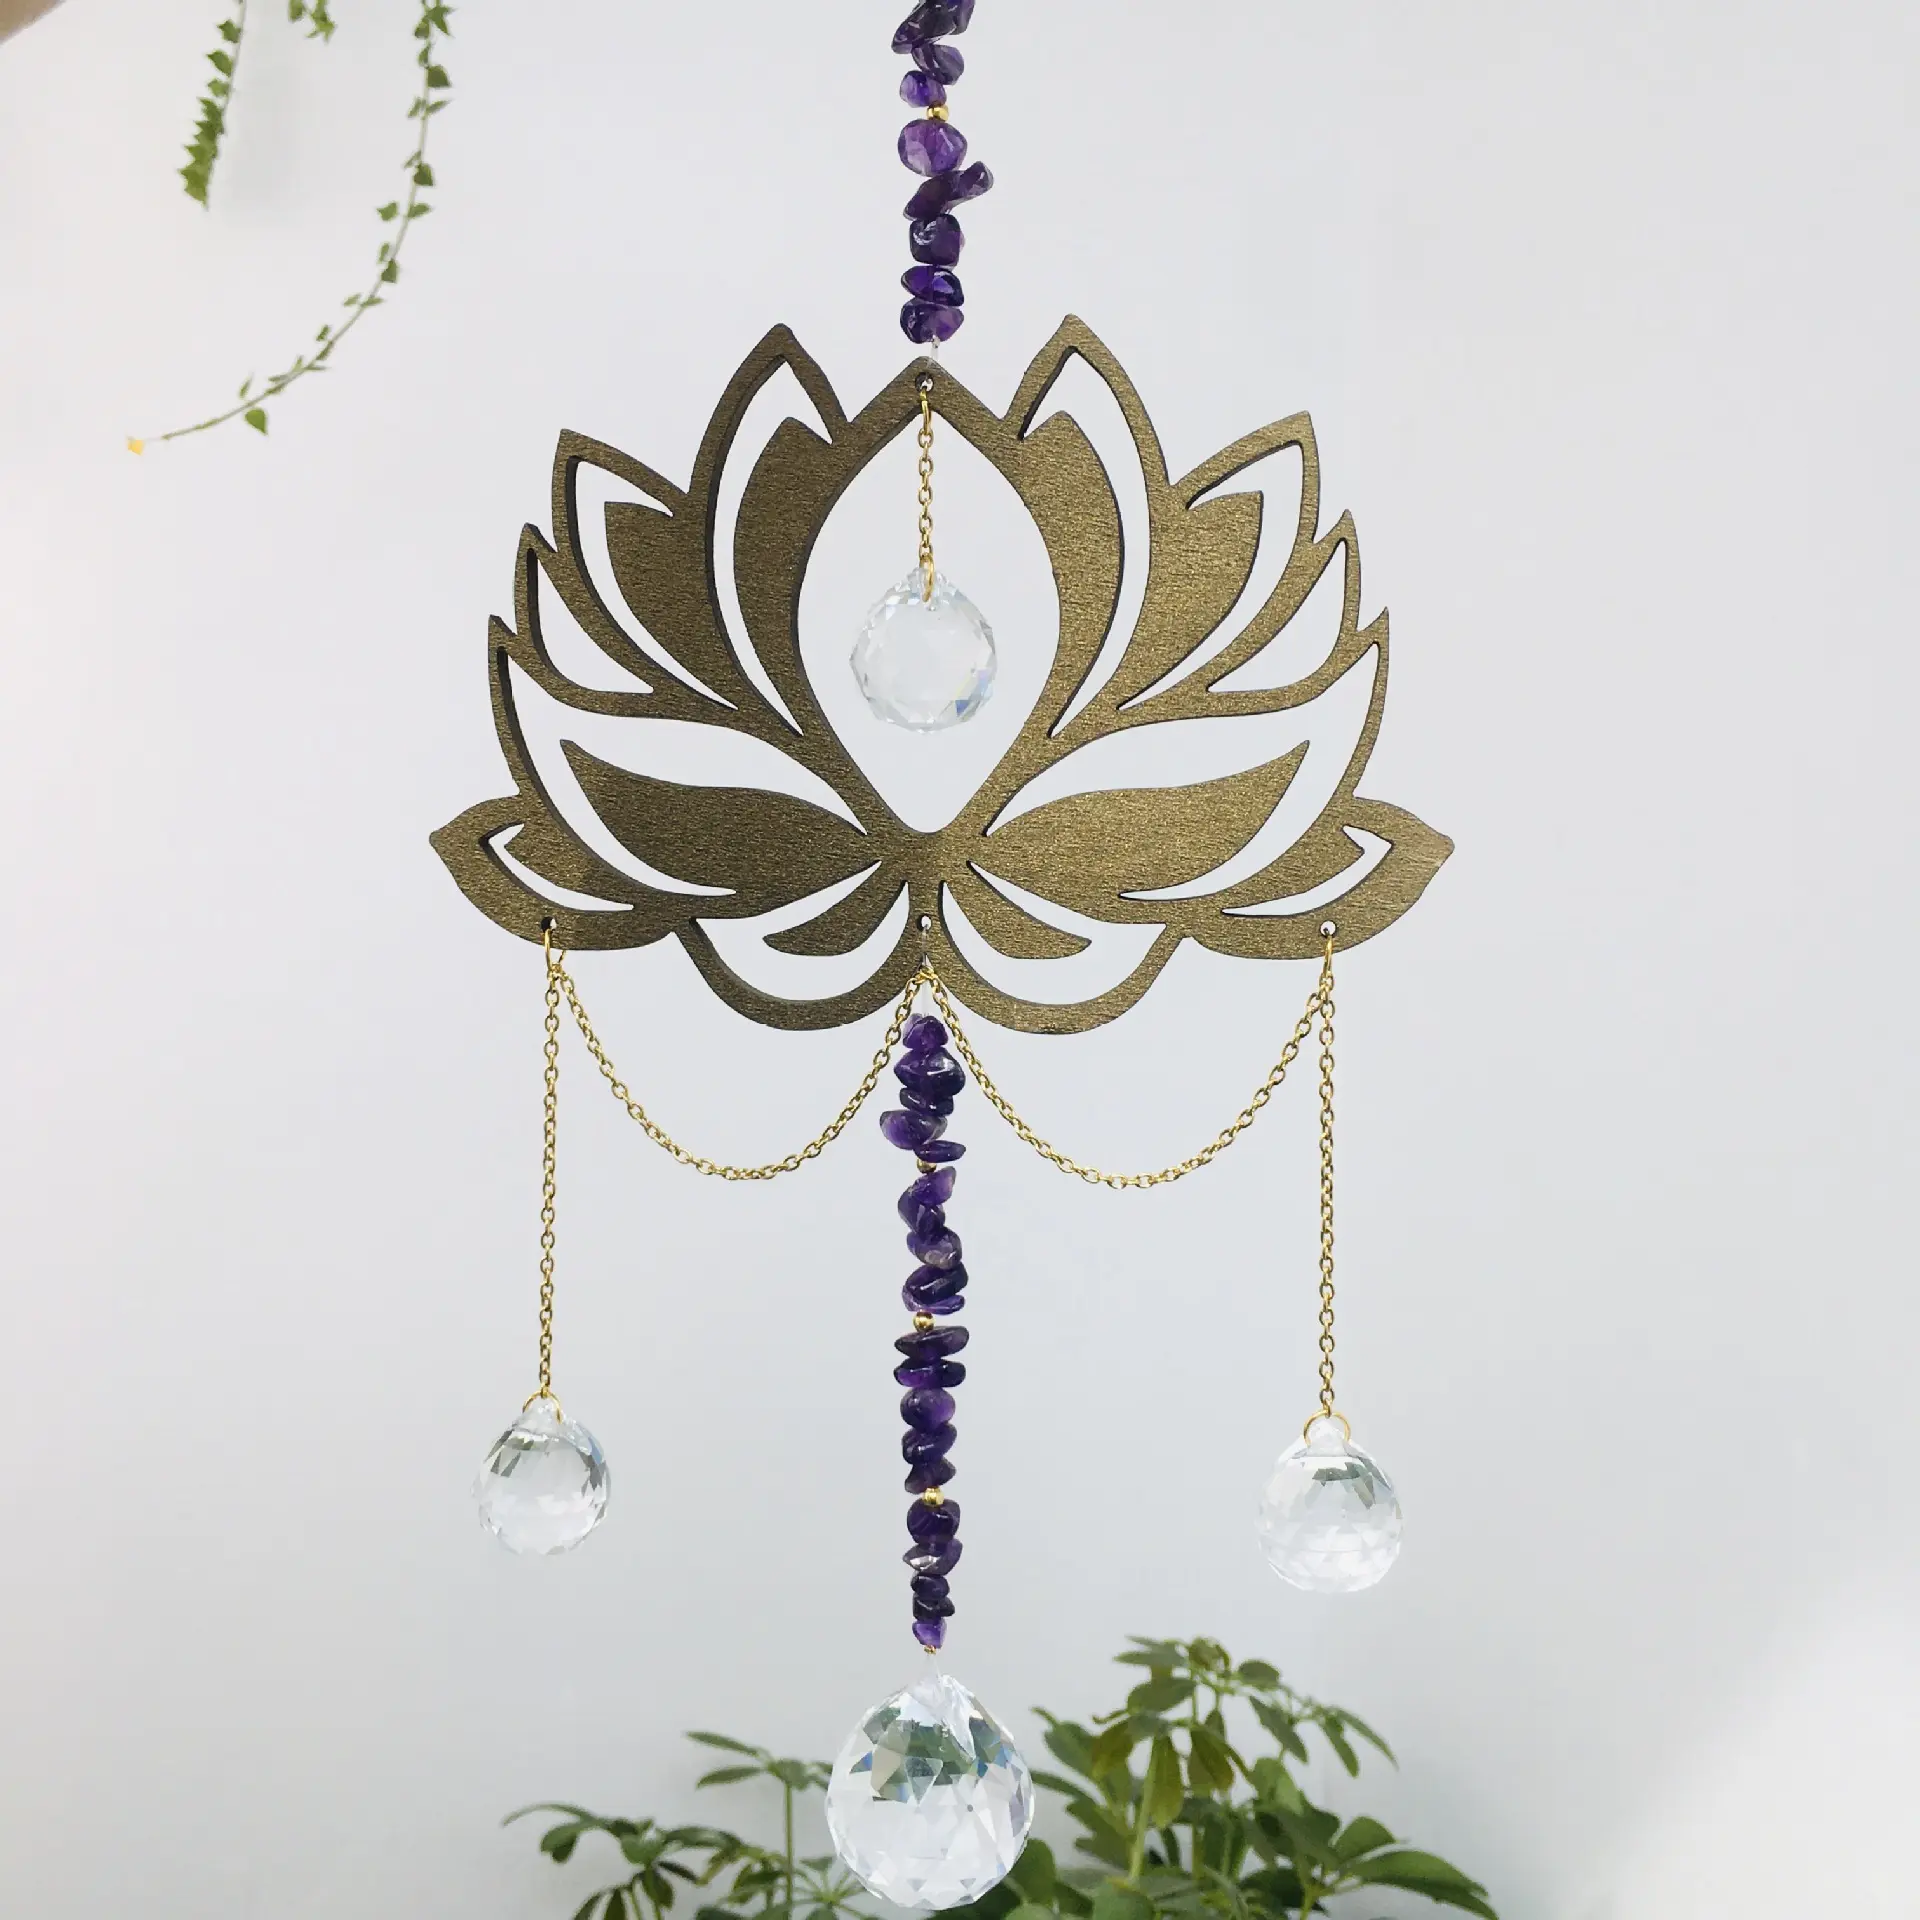 Amethyst Crystal Lotus Flower Suncatcher K9 Glass Prism Crystal Ball Pendant Sun Catcher Decor for Home